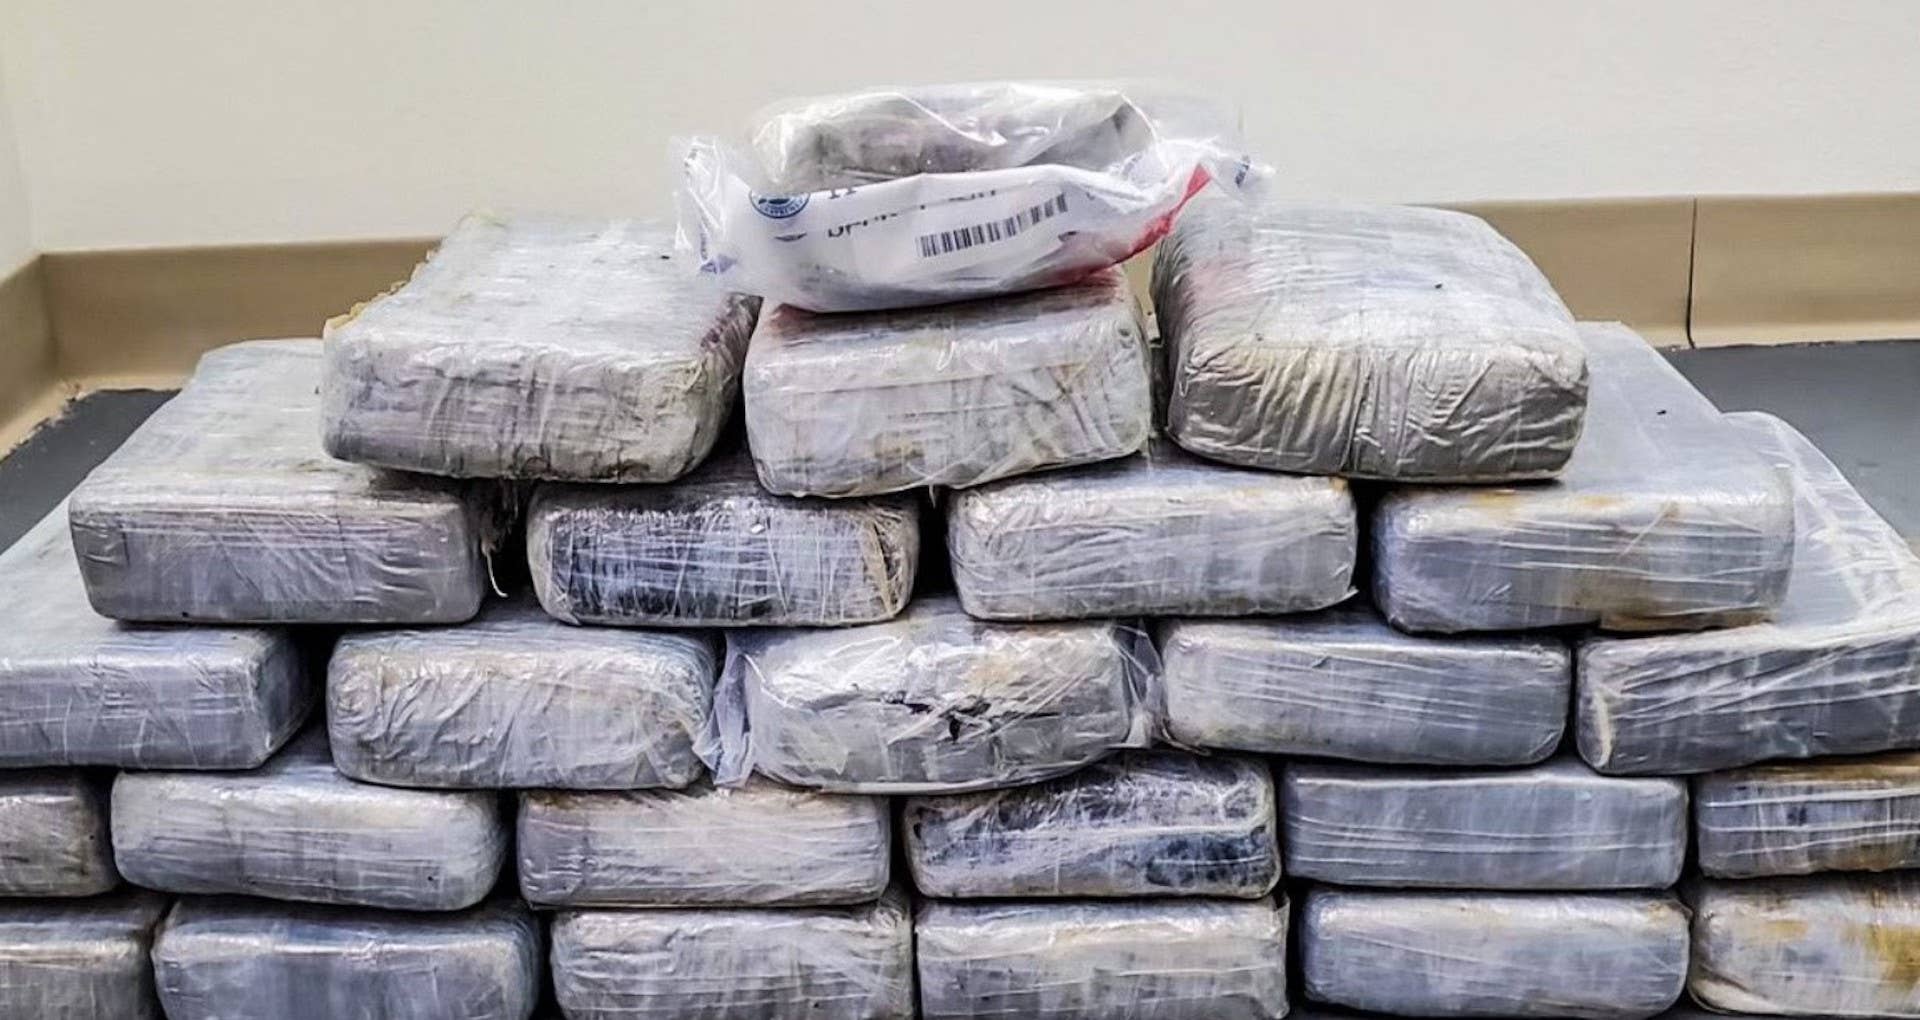 Police seize $1 Million worth of cocaine floating off Florida Keys